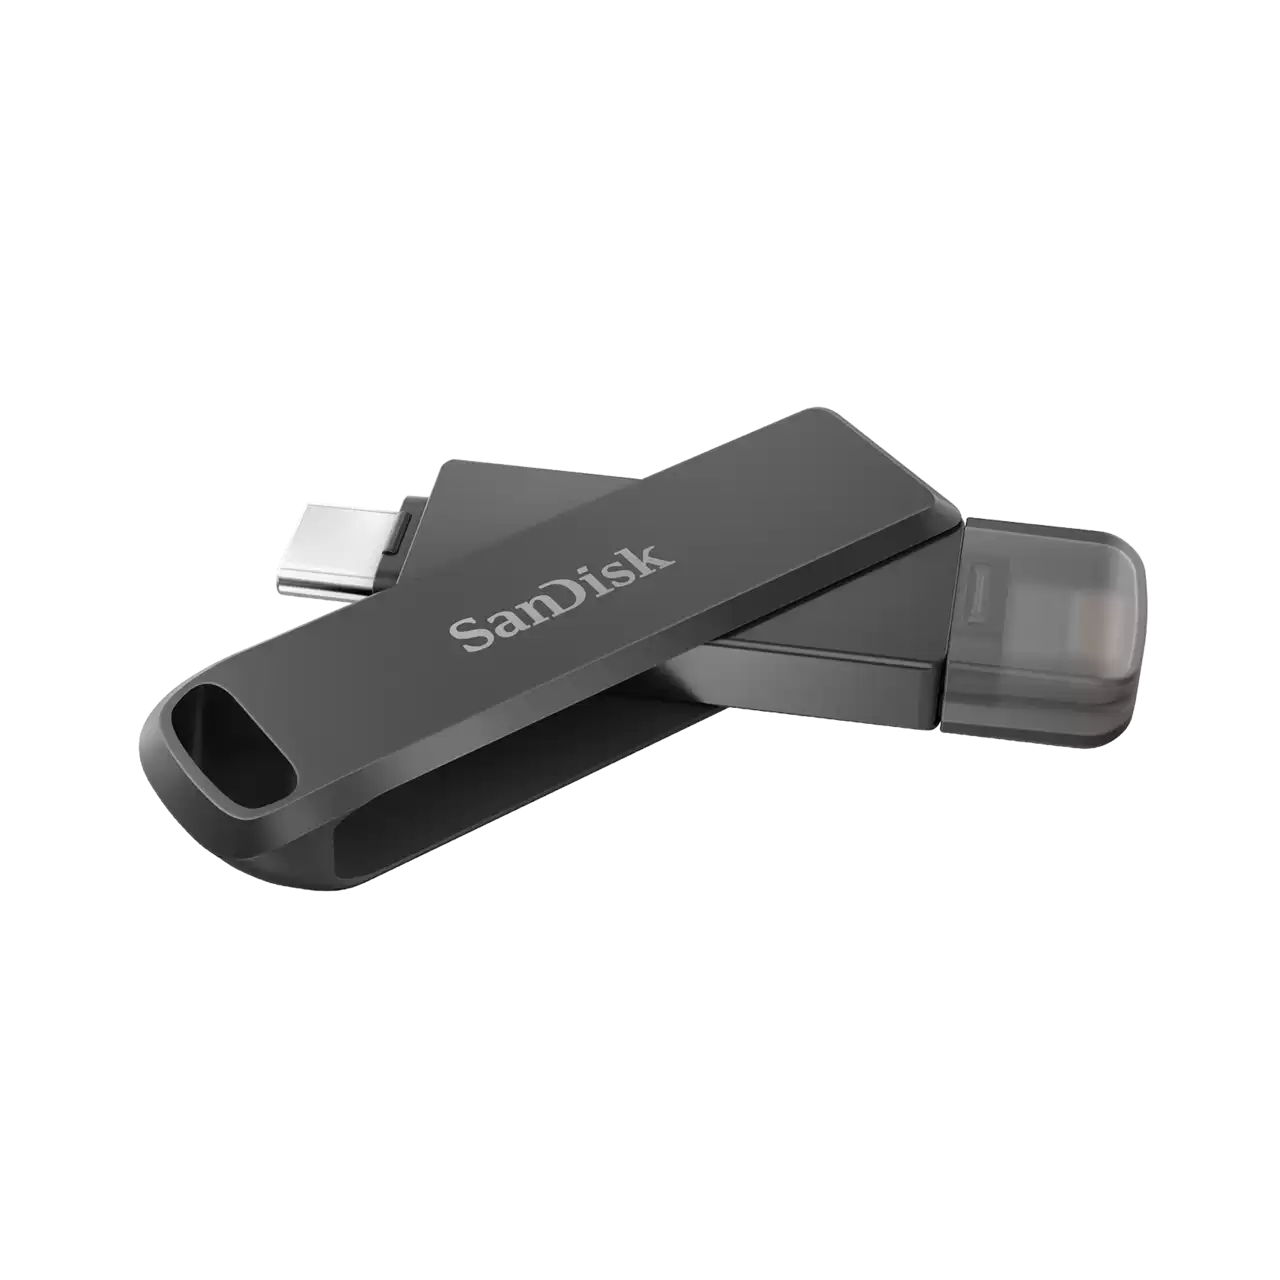 SanDisk 256GB iXpand Flash Drive Go - Apple